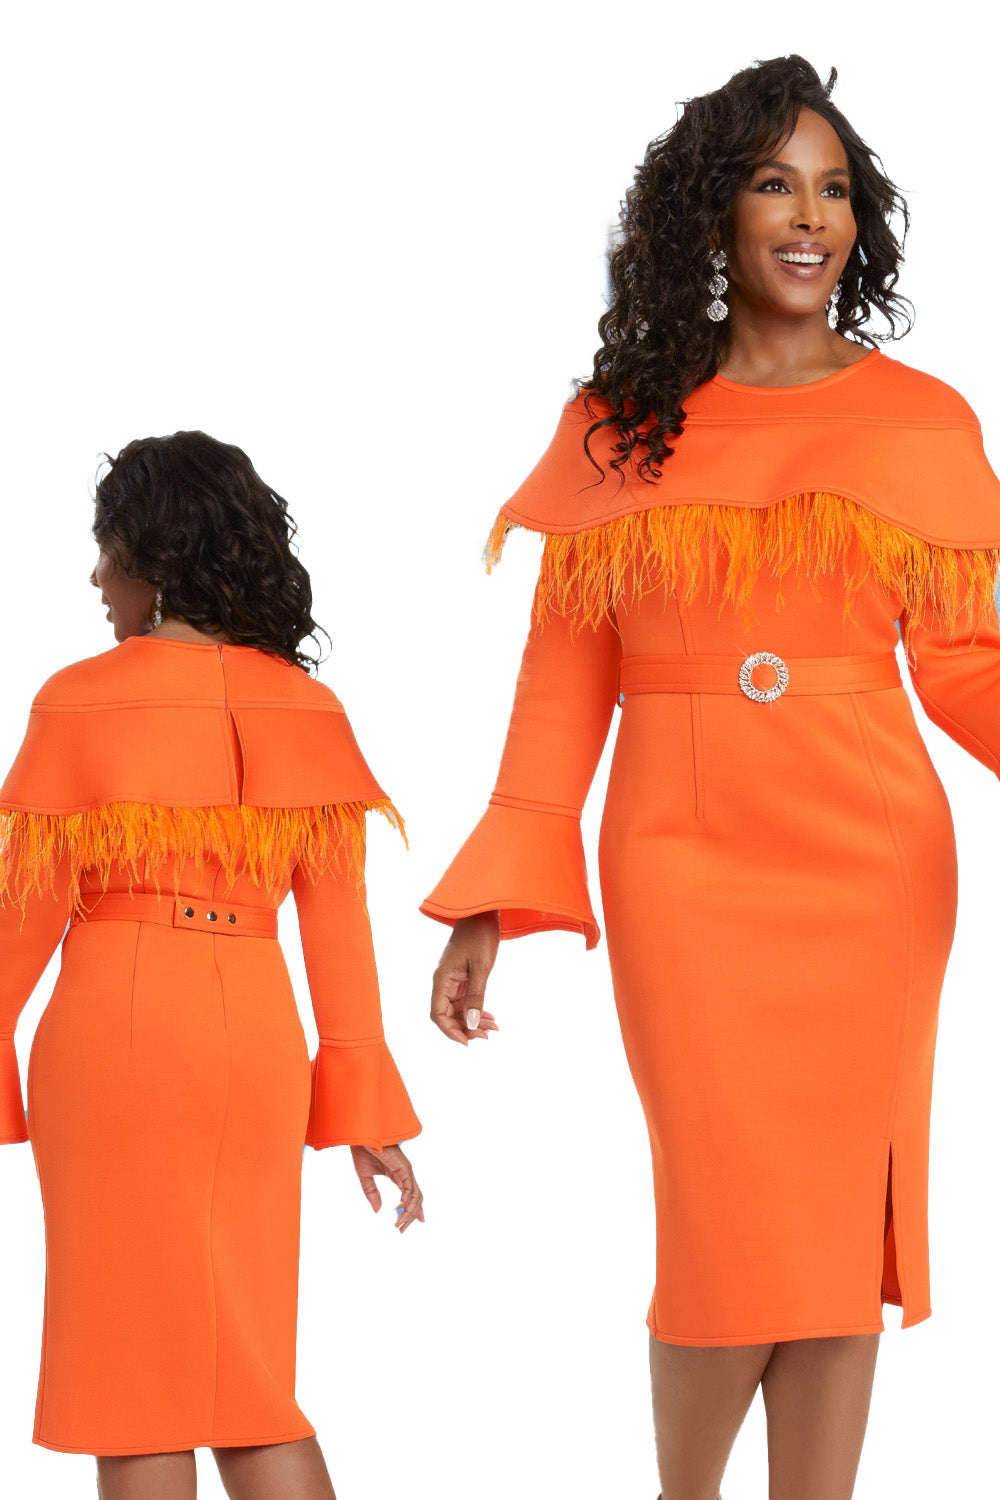 Donna Vinci Church Dress 12066 - Church Suits For Less